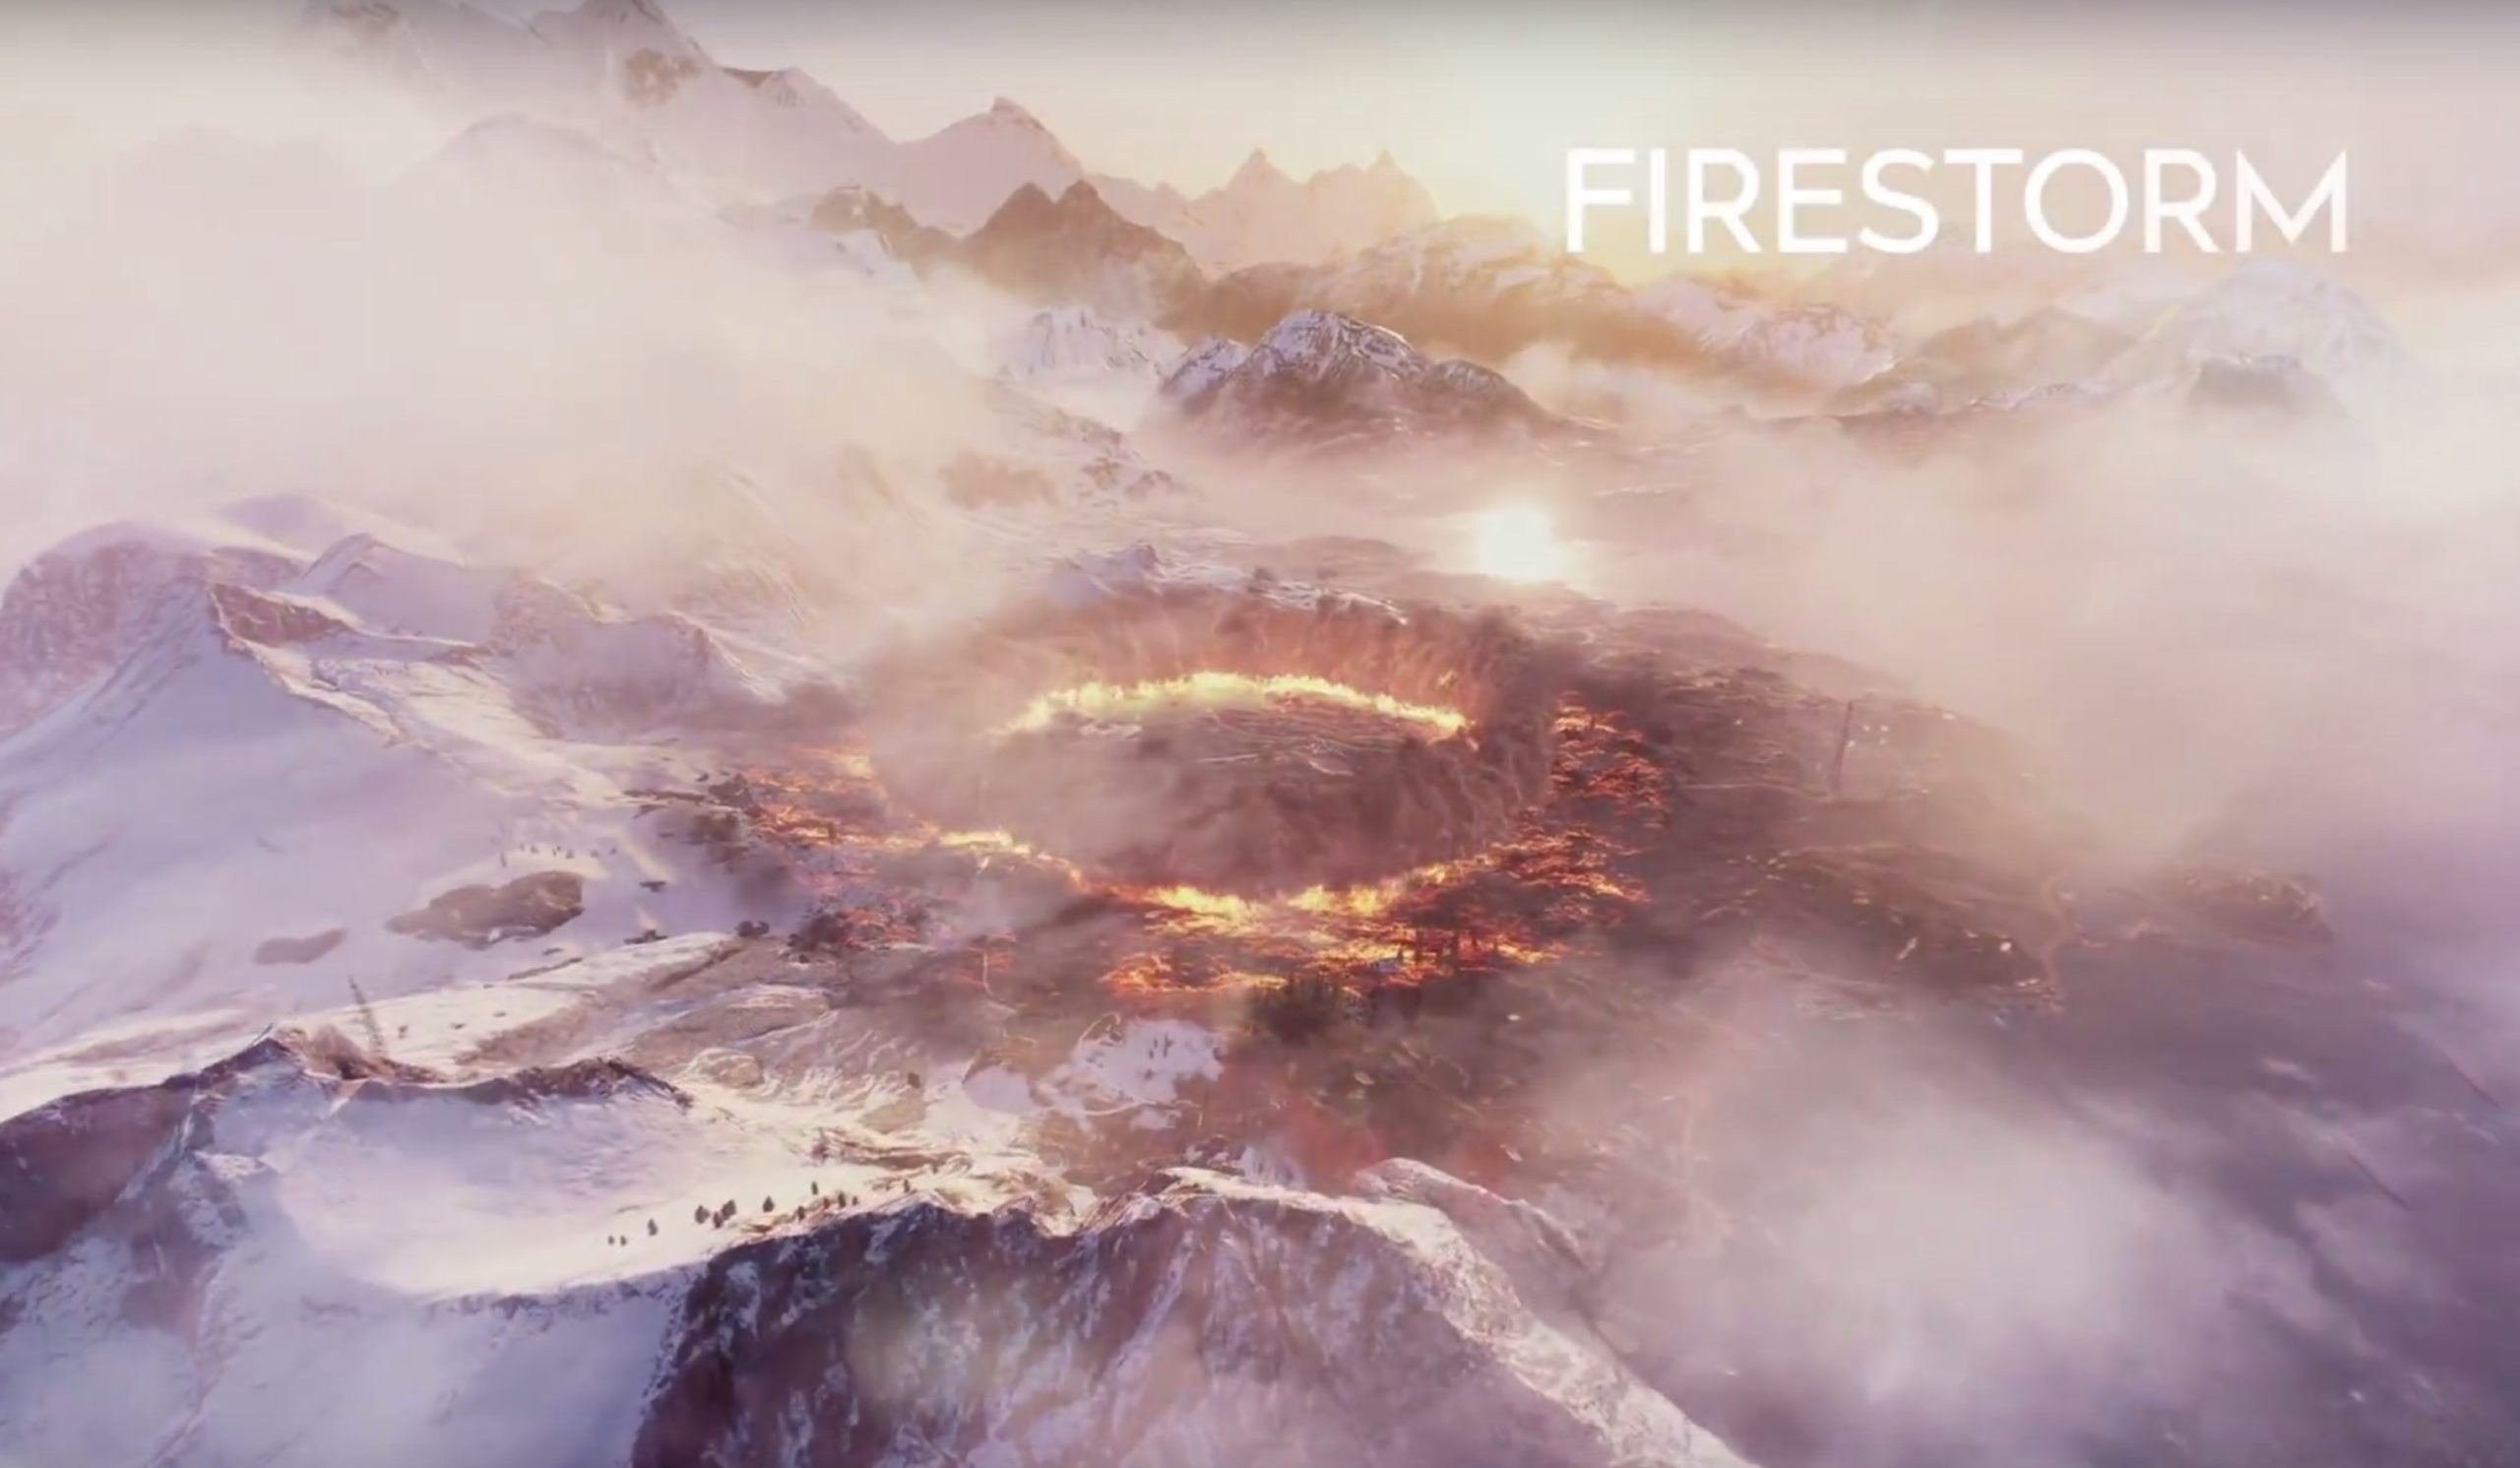 Battlefield V Battle Royale Mode Finally Gets A Name - Firestorm